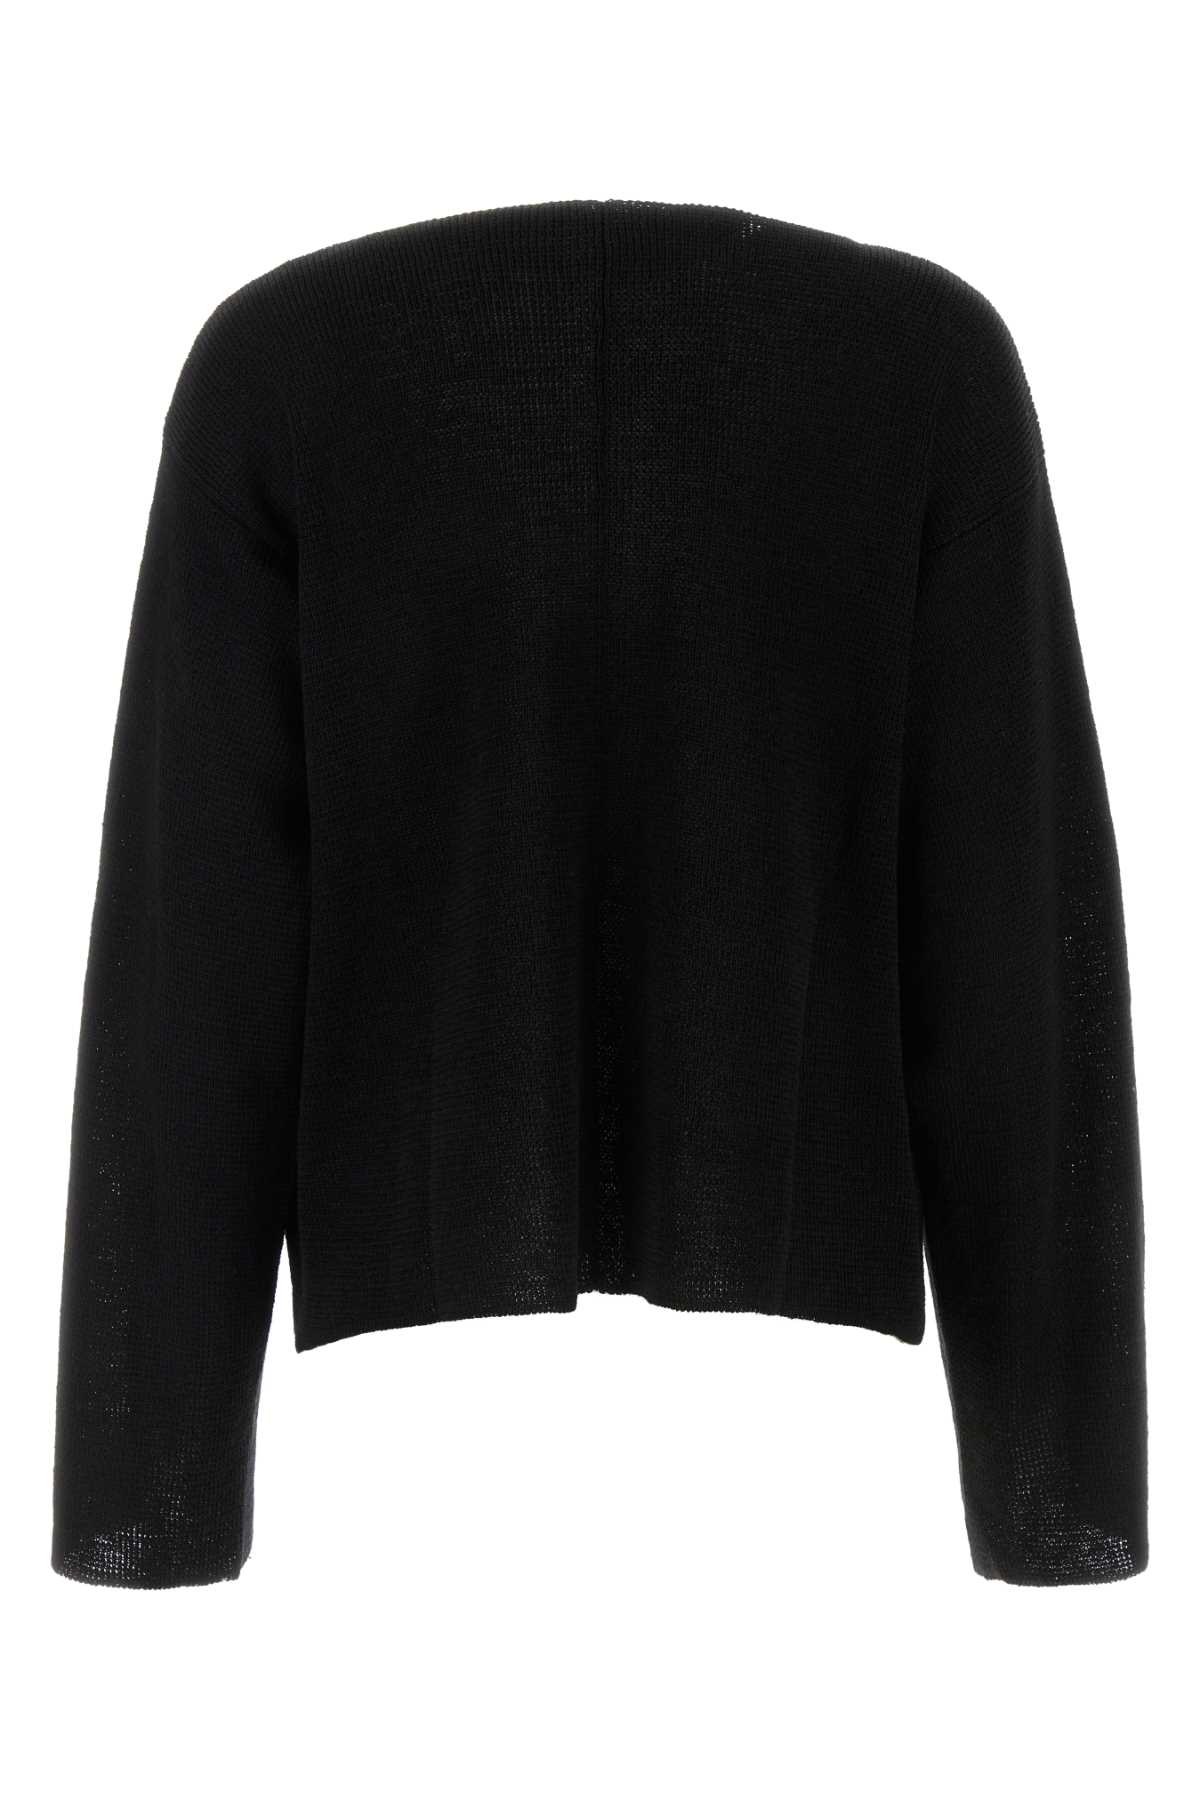 Shop The Row Black Linen Sweater